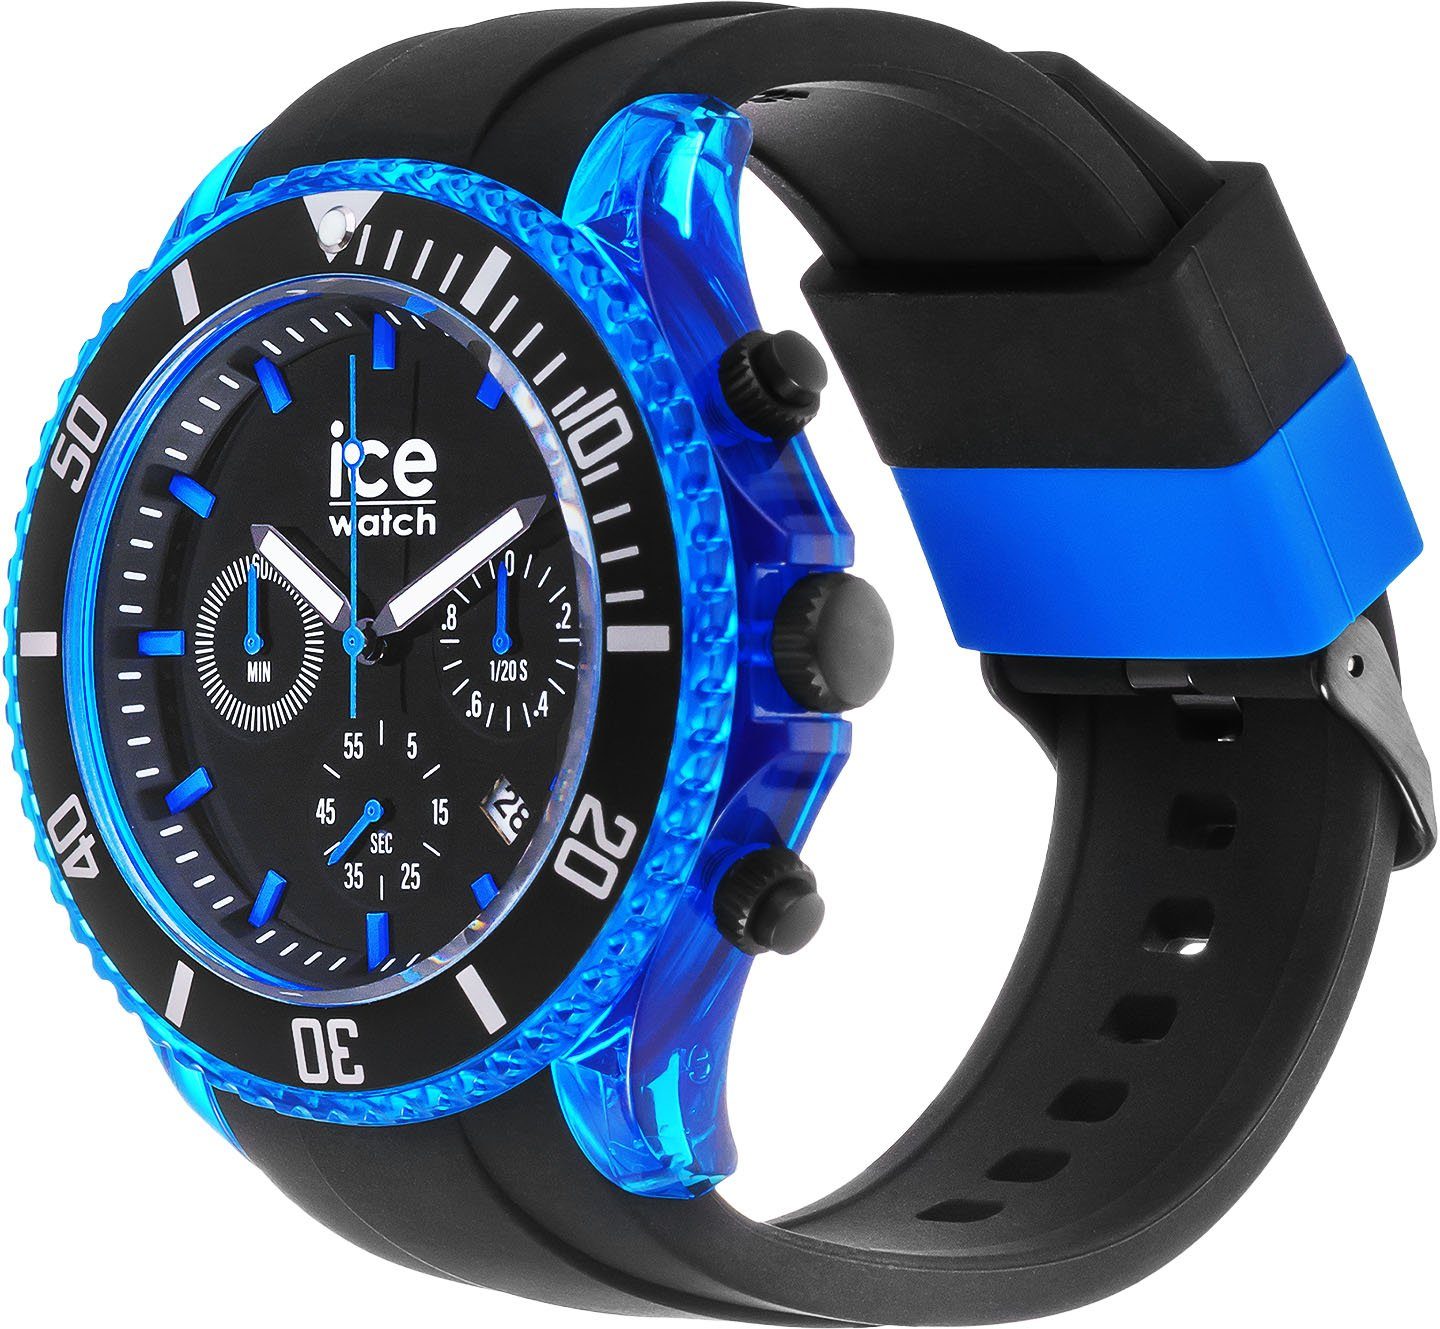 - 019844 Black ICE CH, large chrono - blue Chronograph - ice-watch Extra